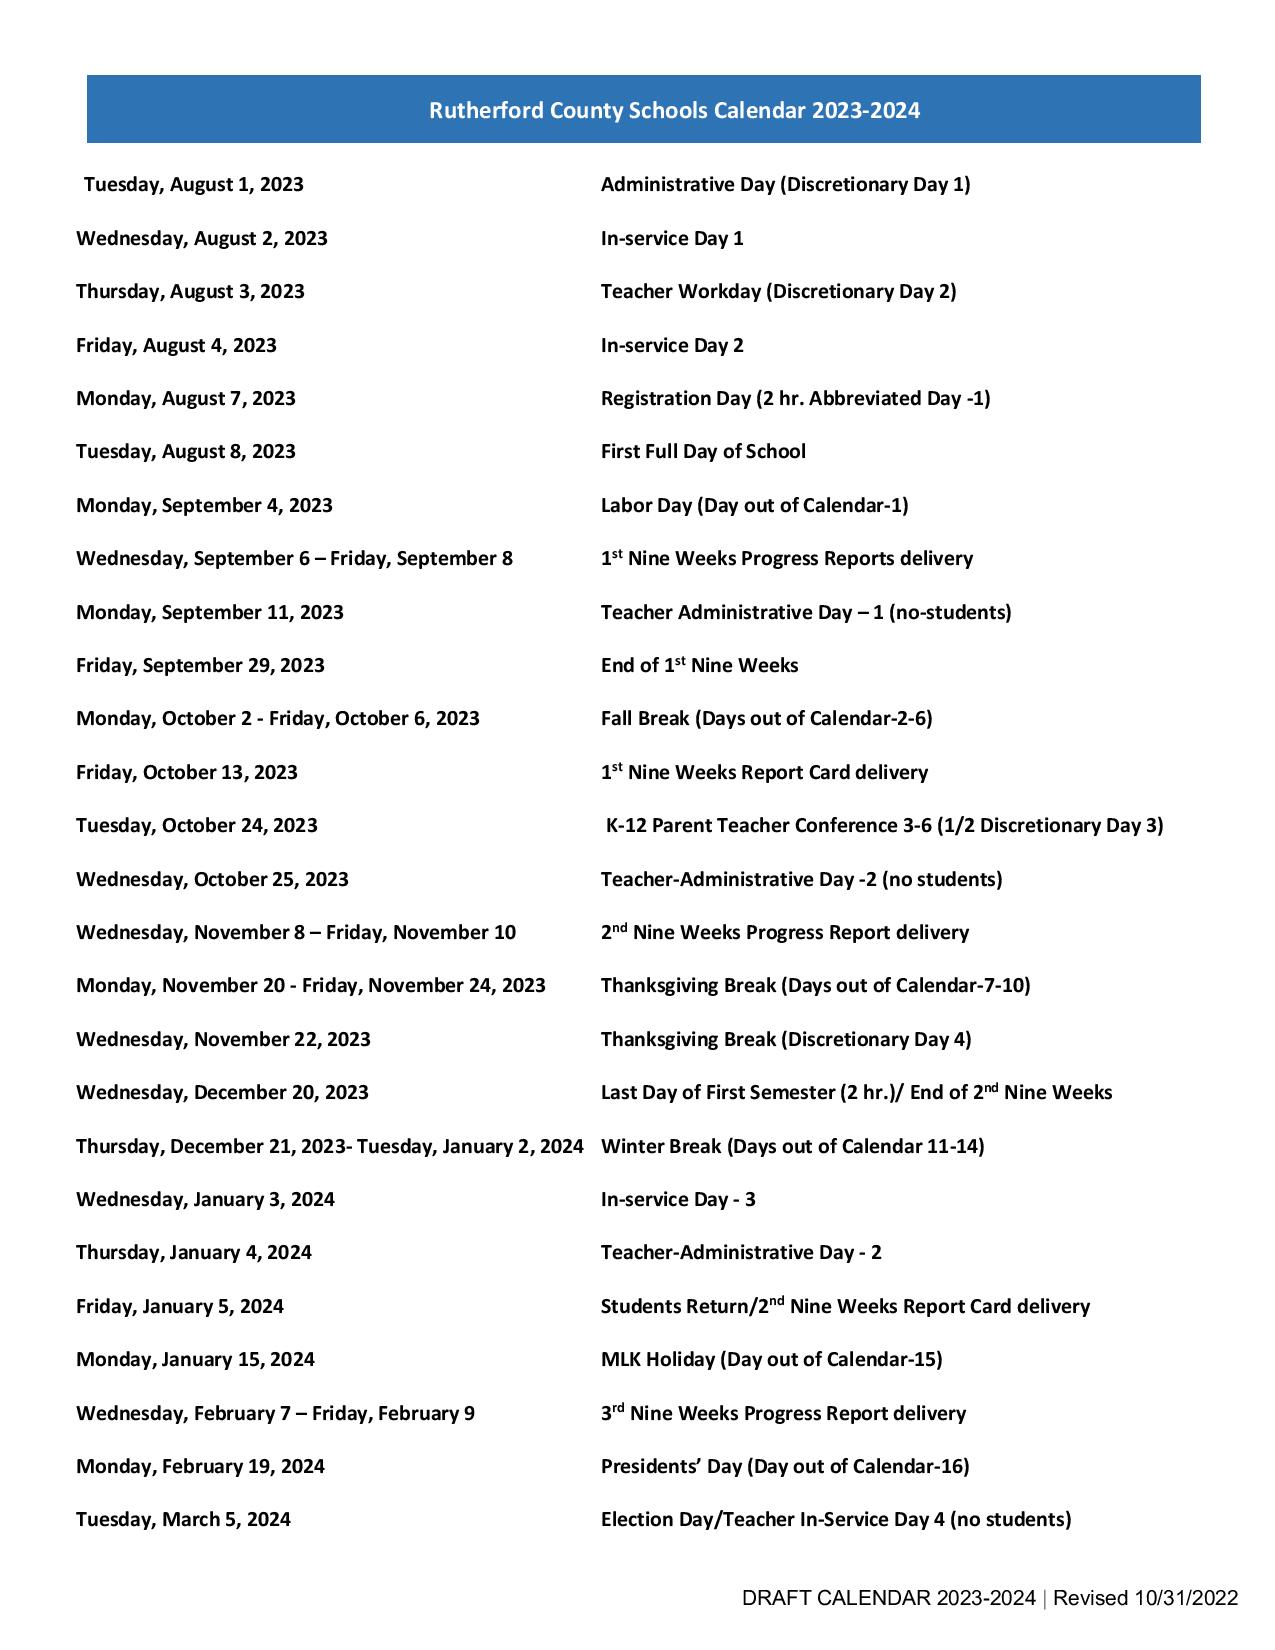 Rutherford County Schools Calendar Holidays 20232024 PDF